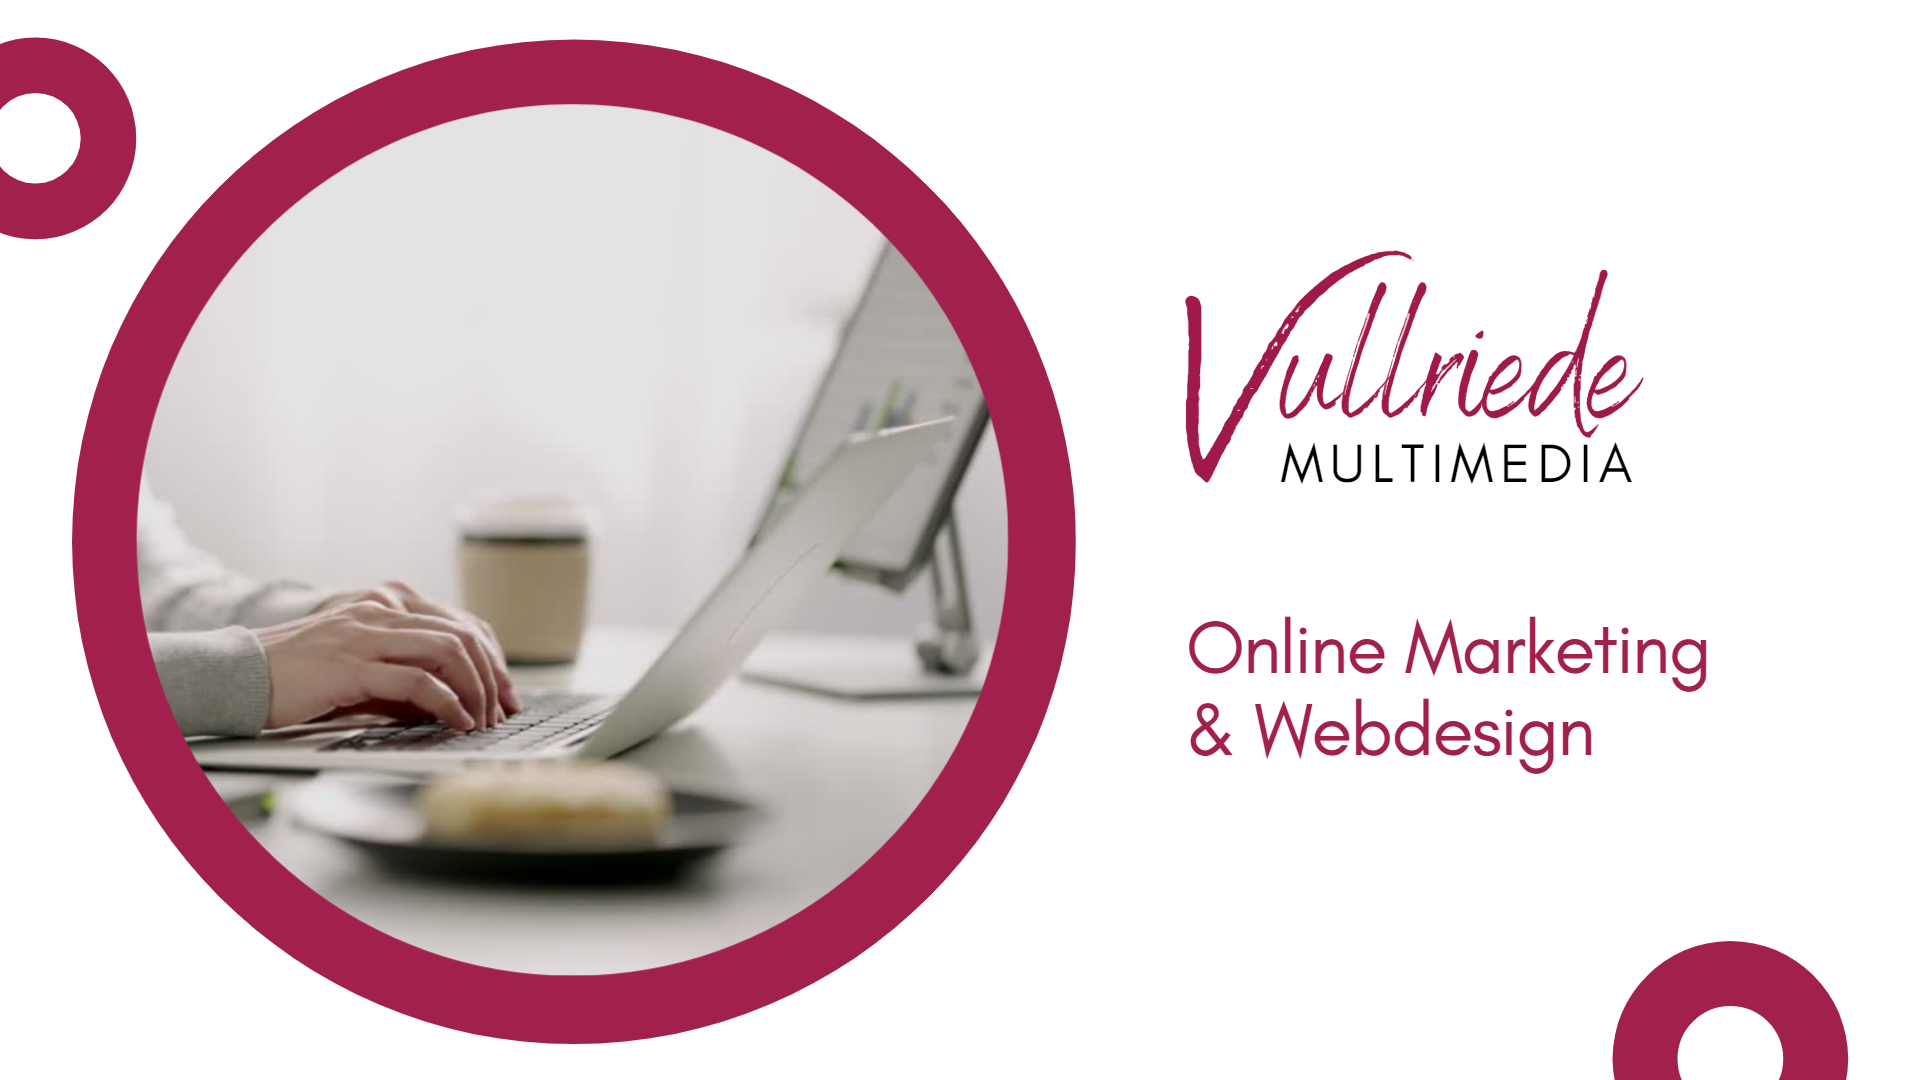 Vullriede Multimedia Online Marketing & Webdesign